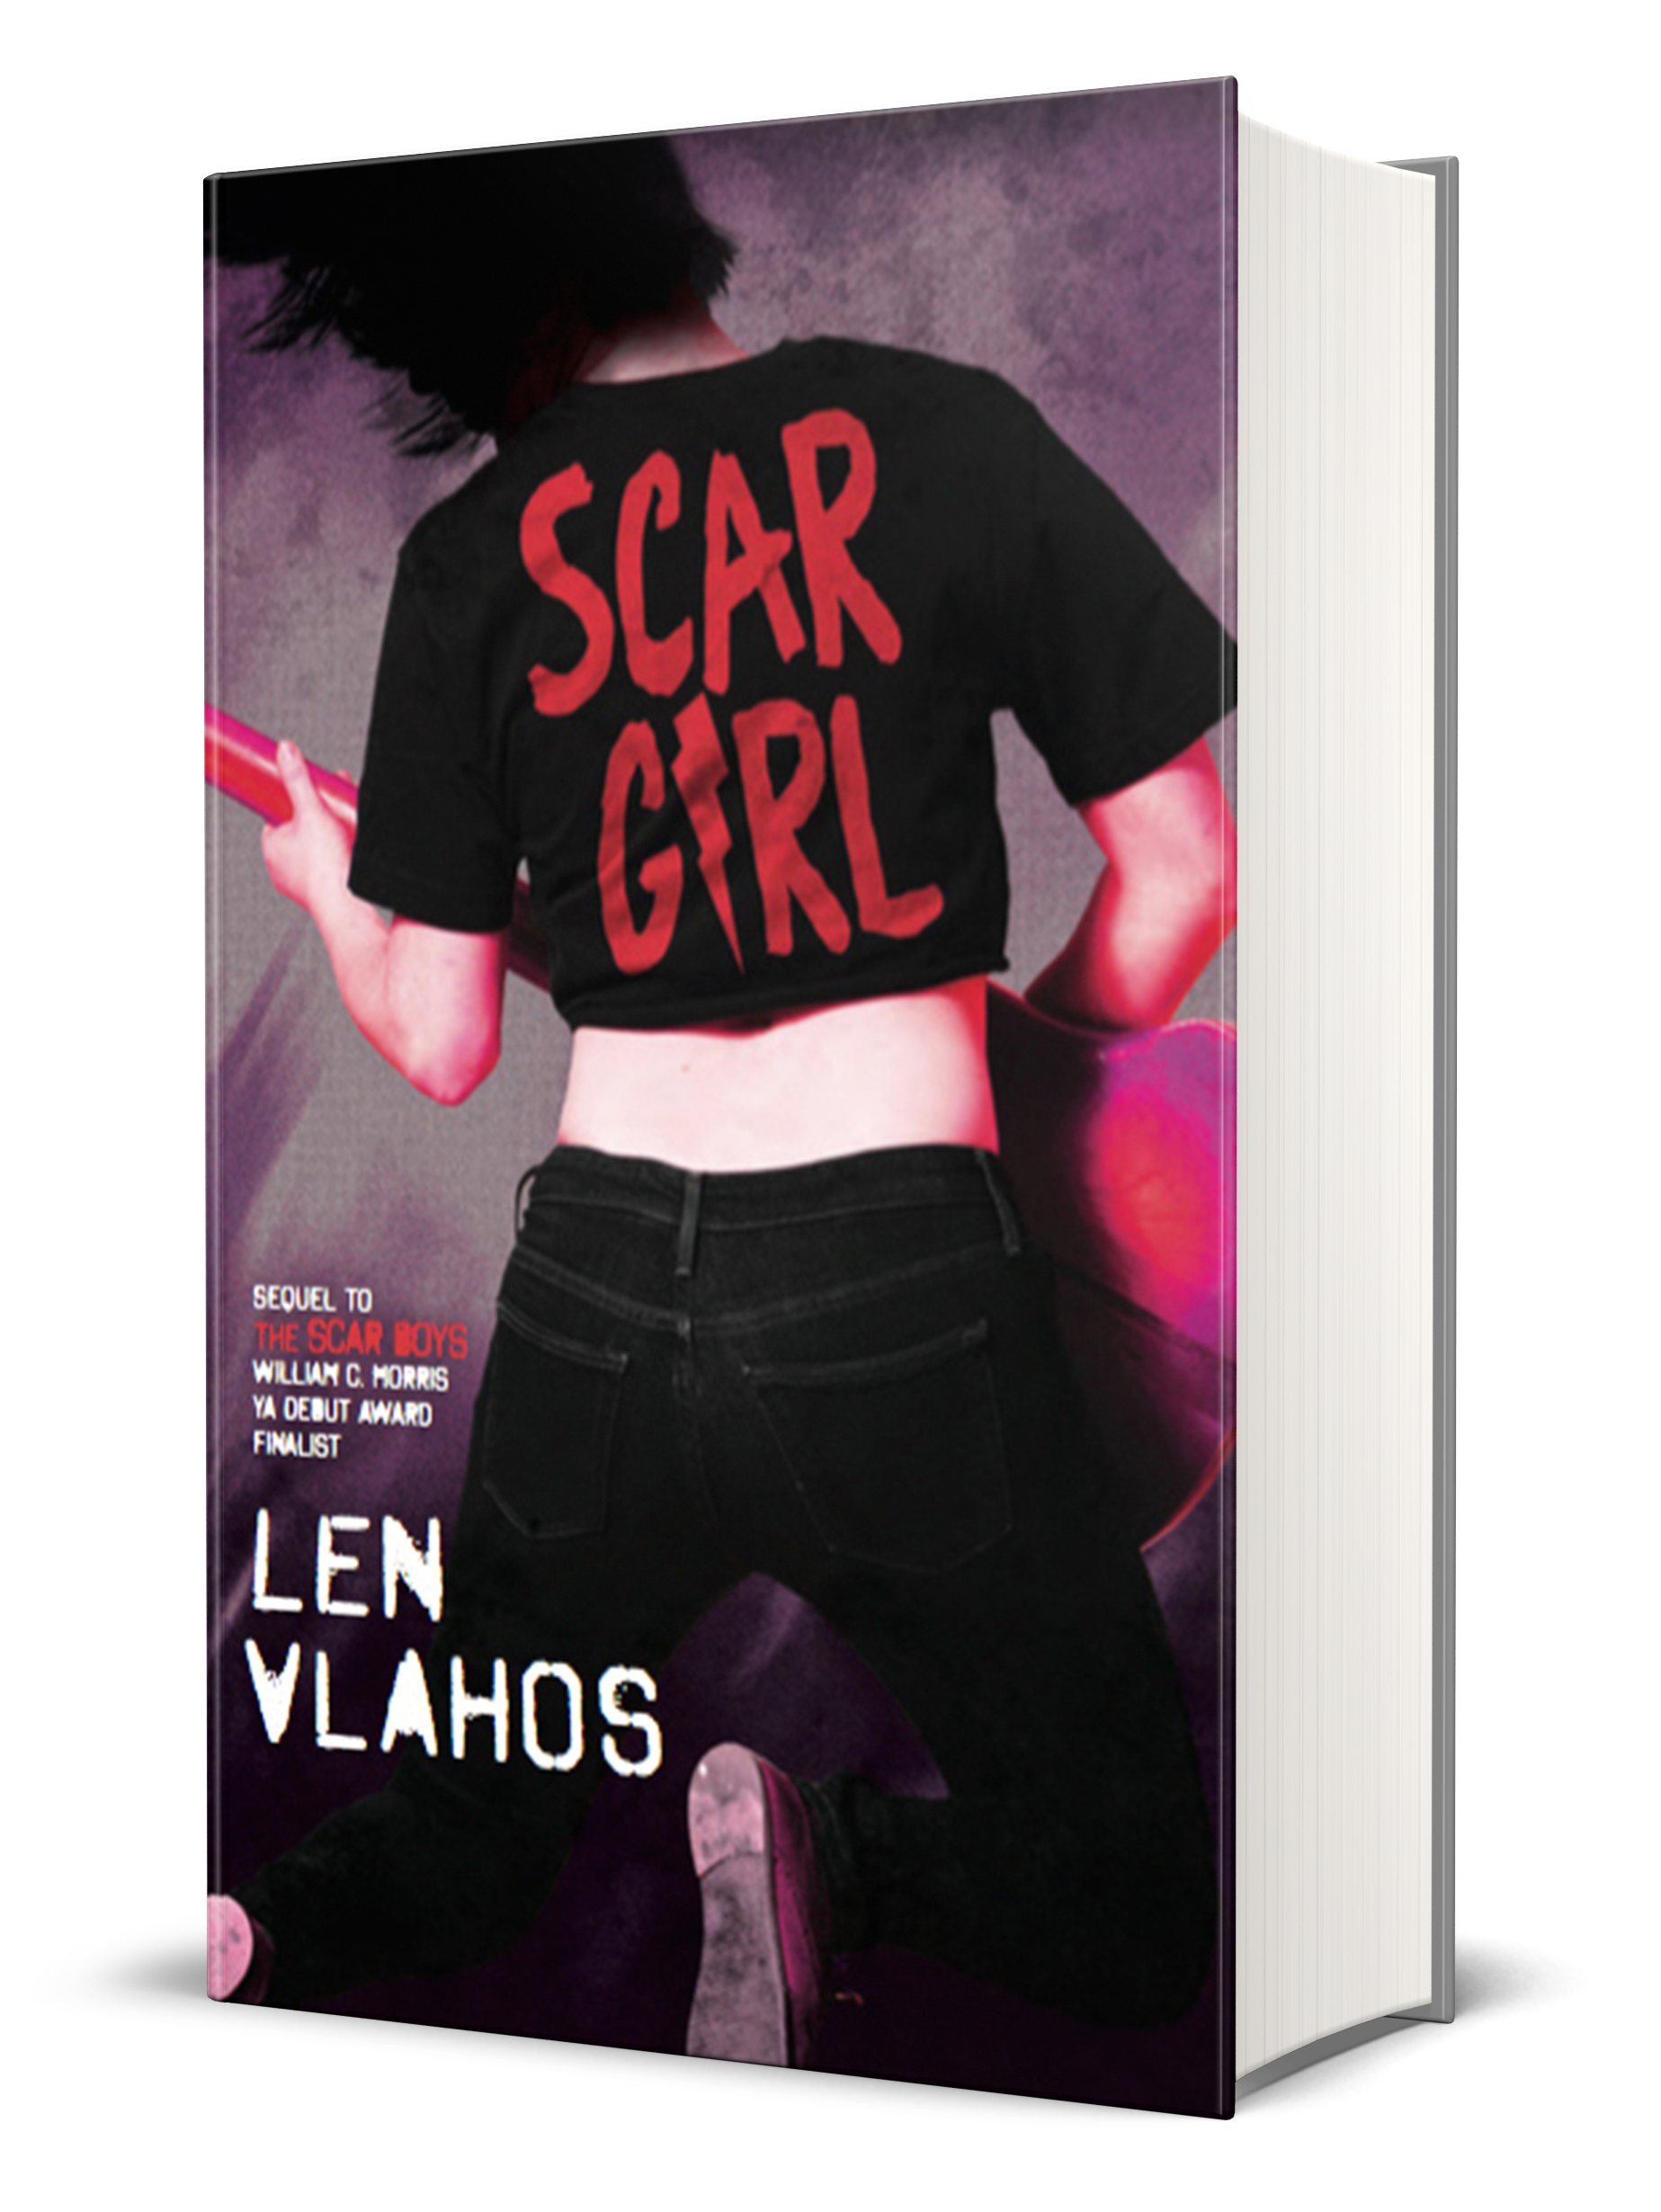 scar girl book by len vlahos